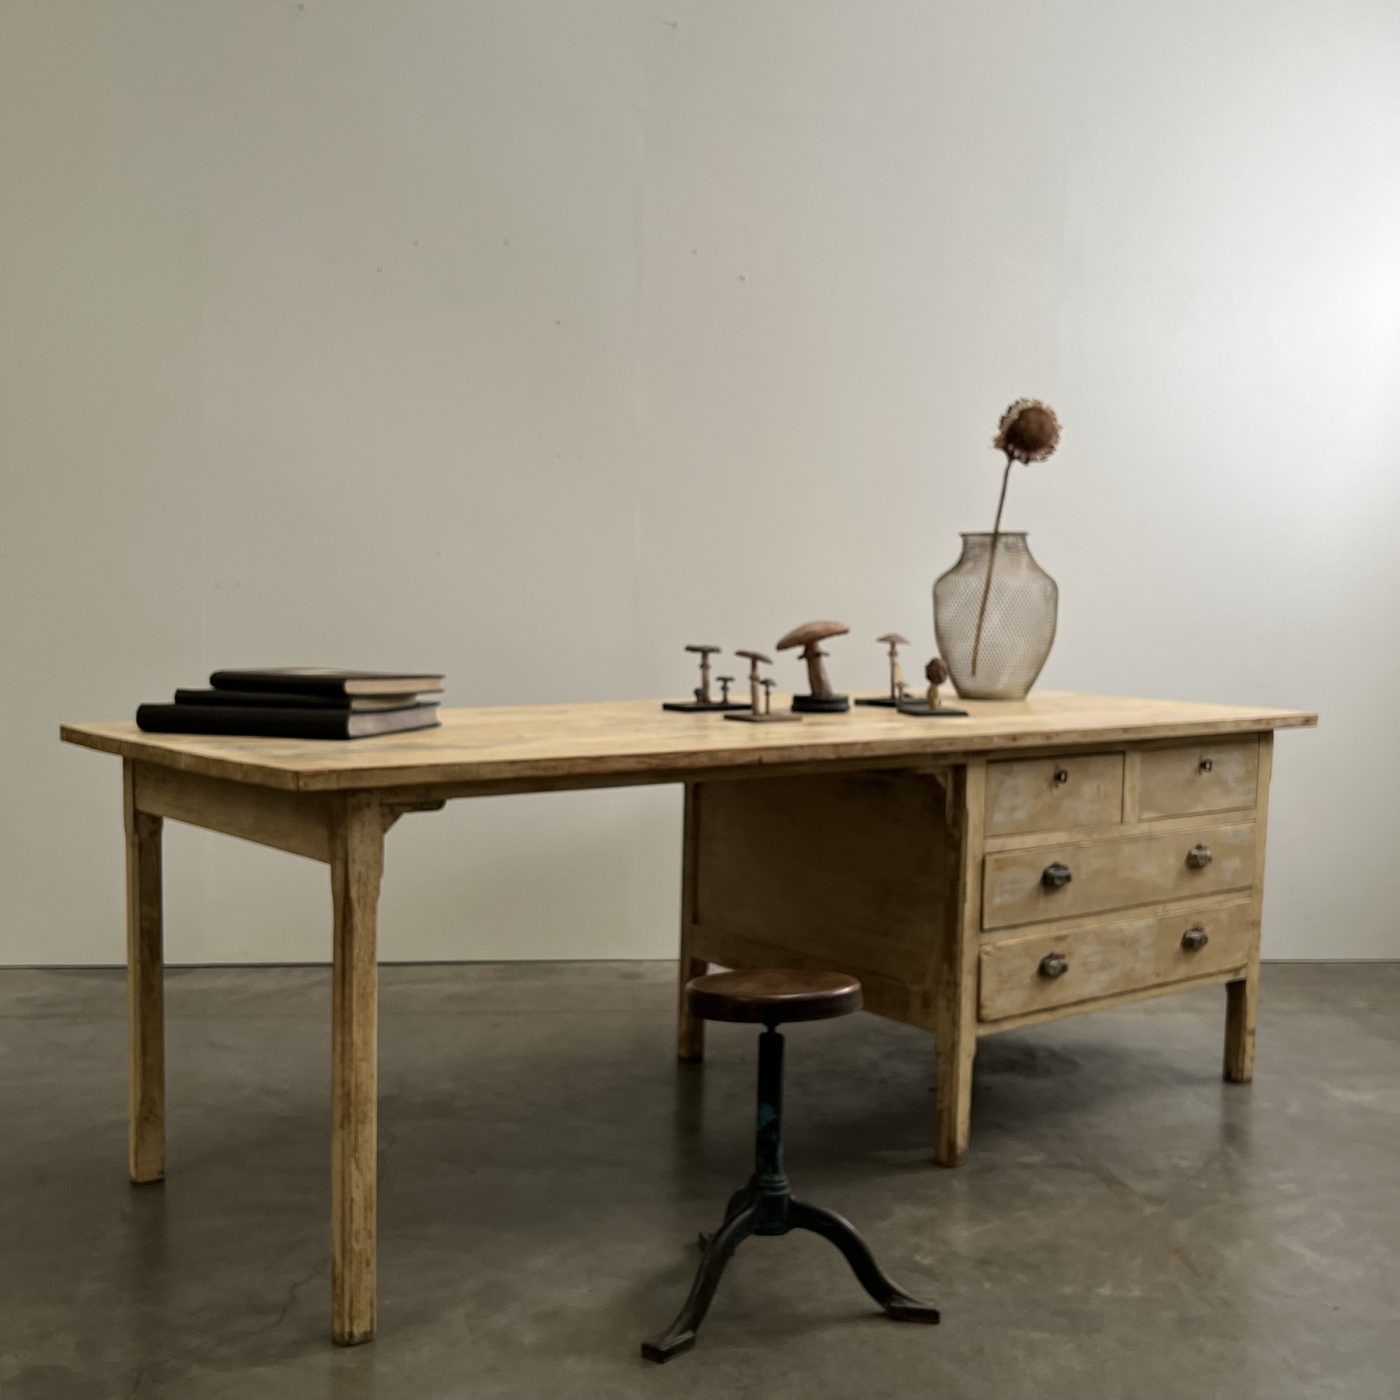 objet-vagabond-painted-desk0006